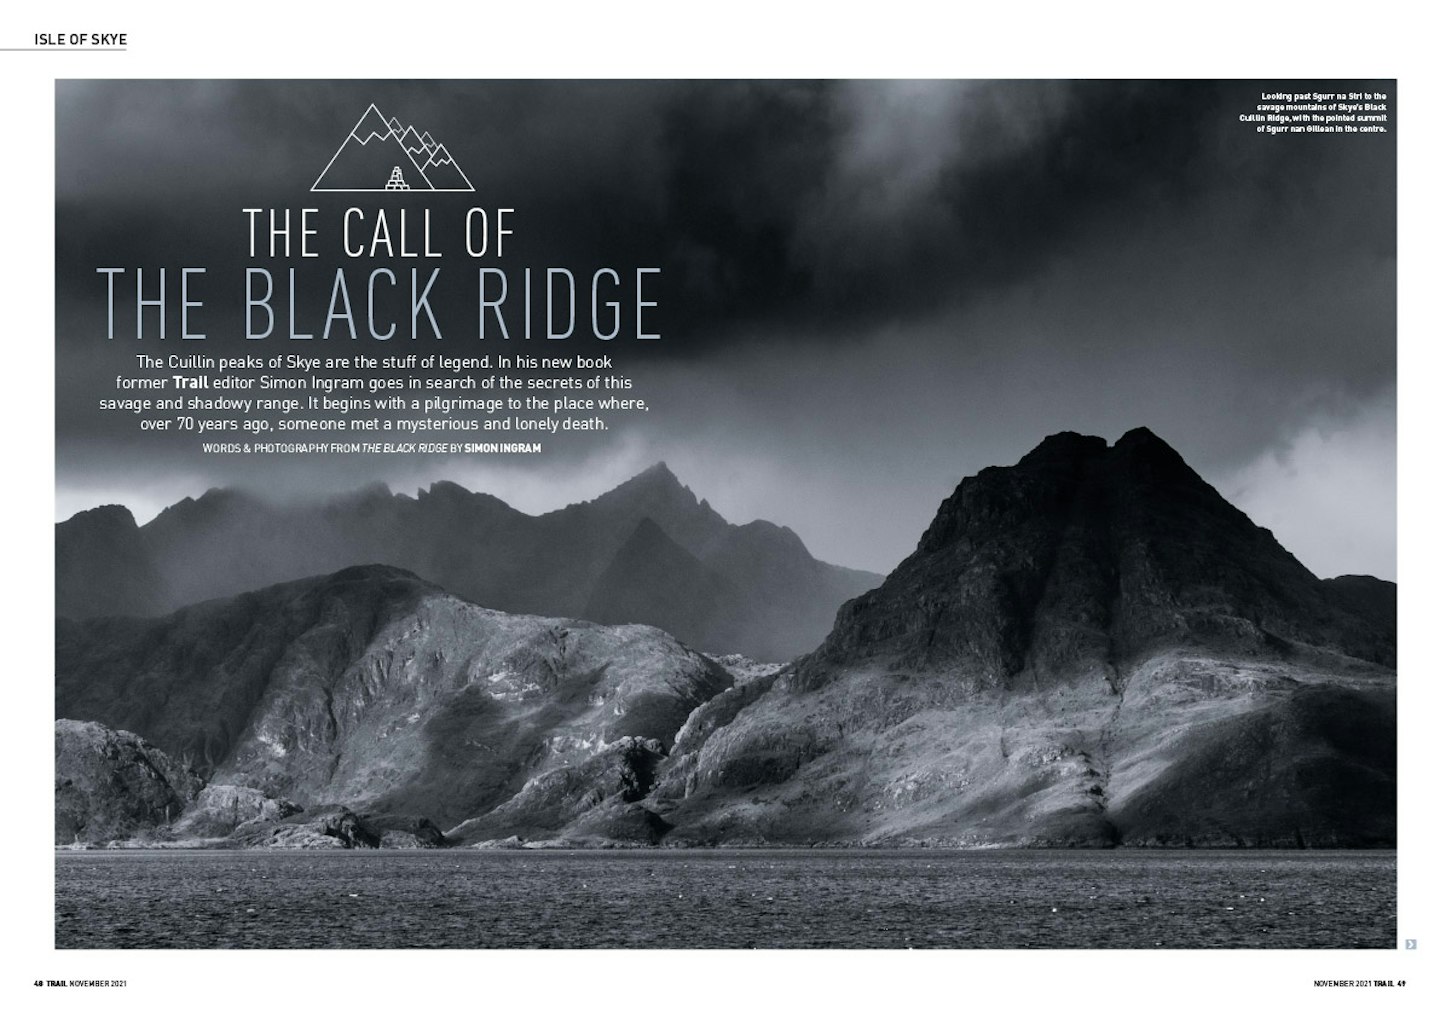 The call of the black ridge